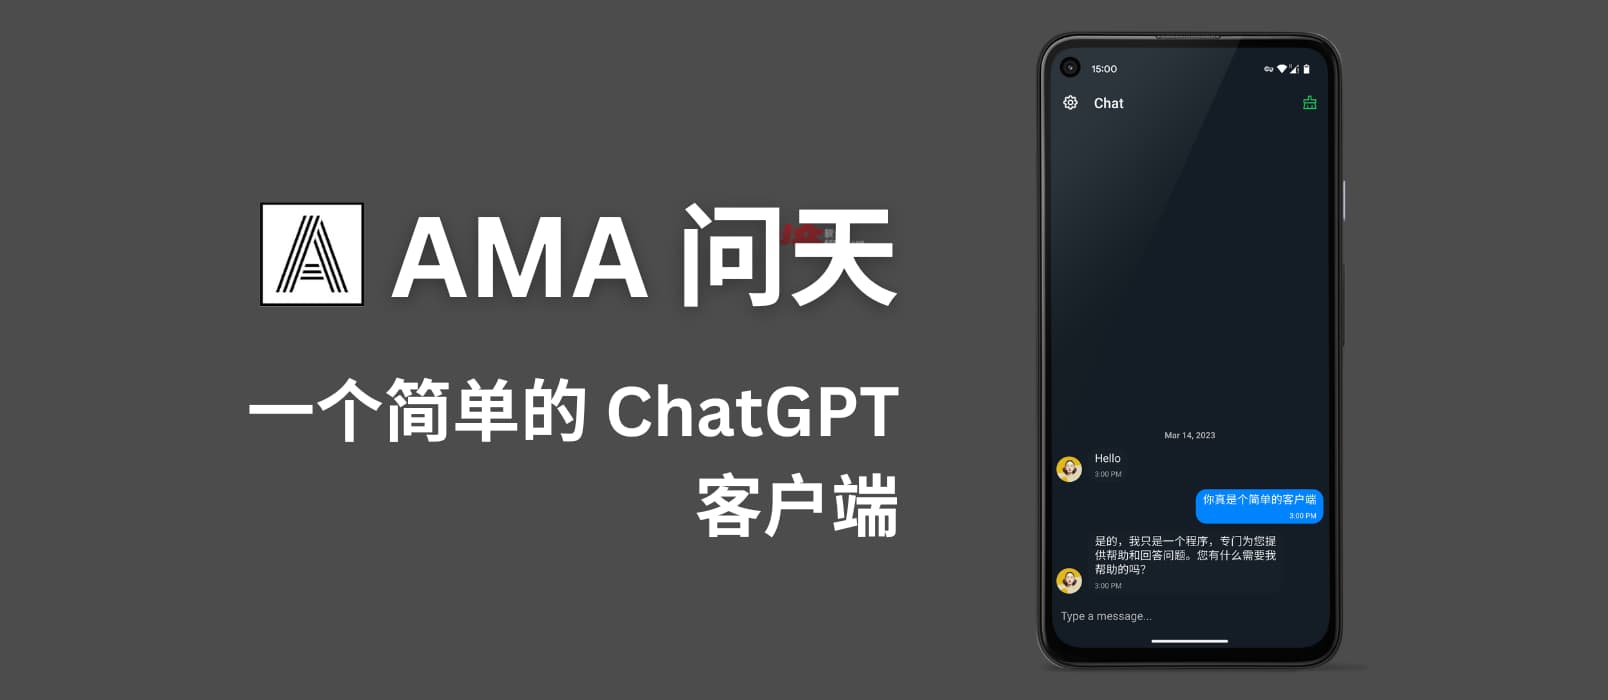 AMA 问天 - 第三方 ChatGPT 客户端[Android]